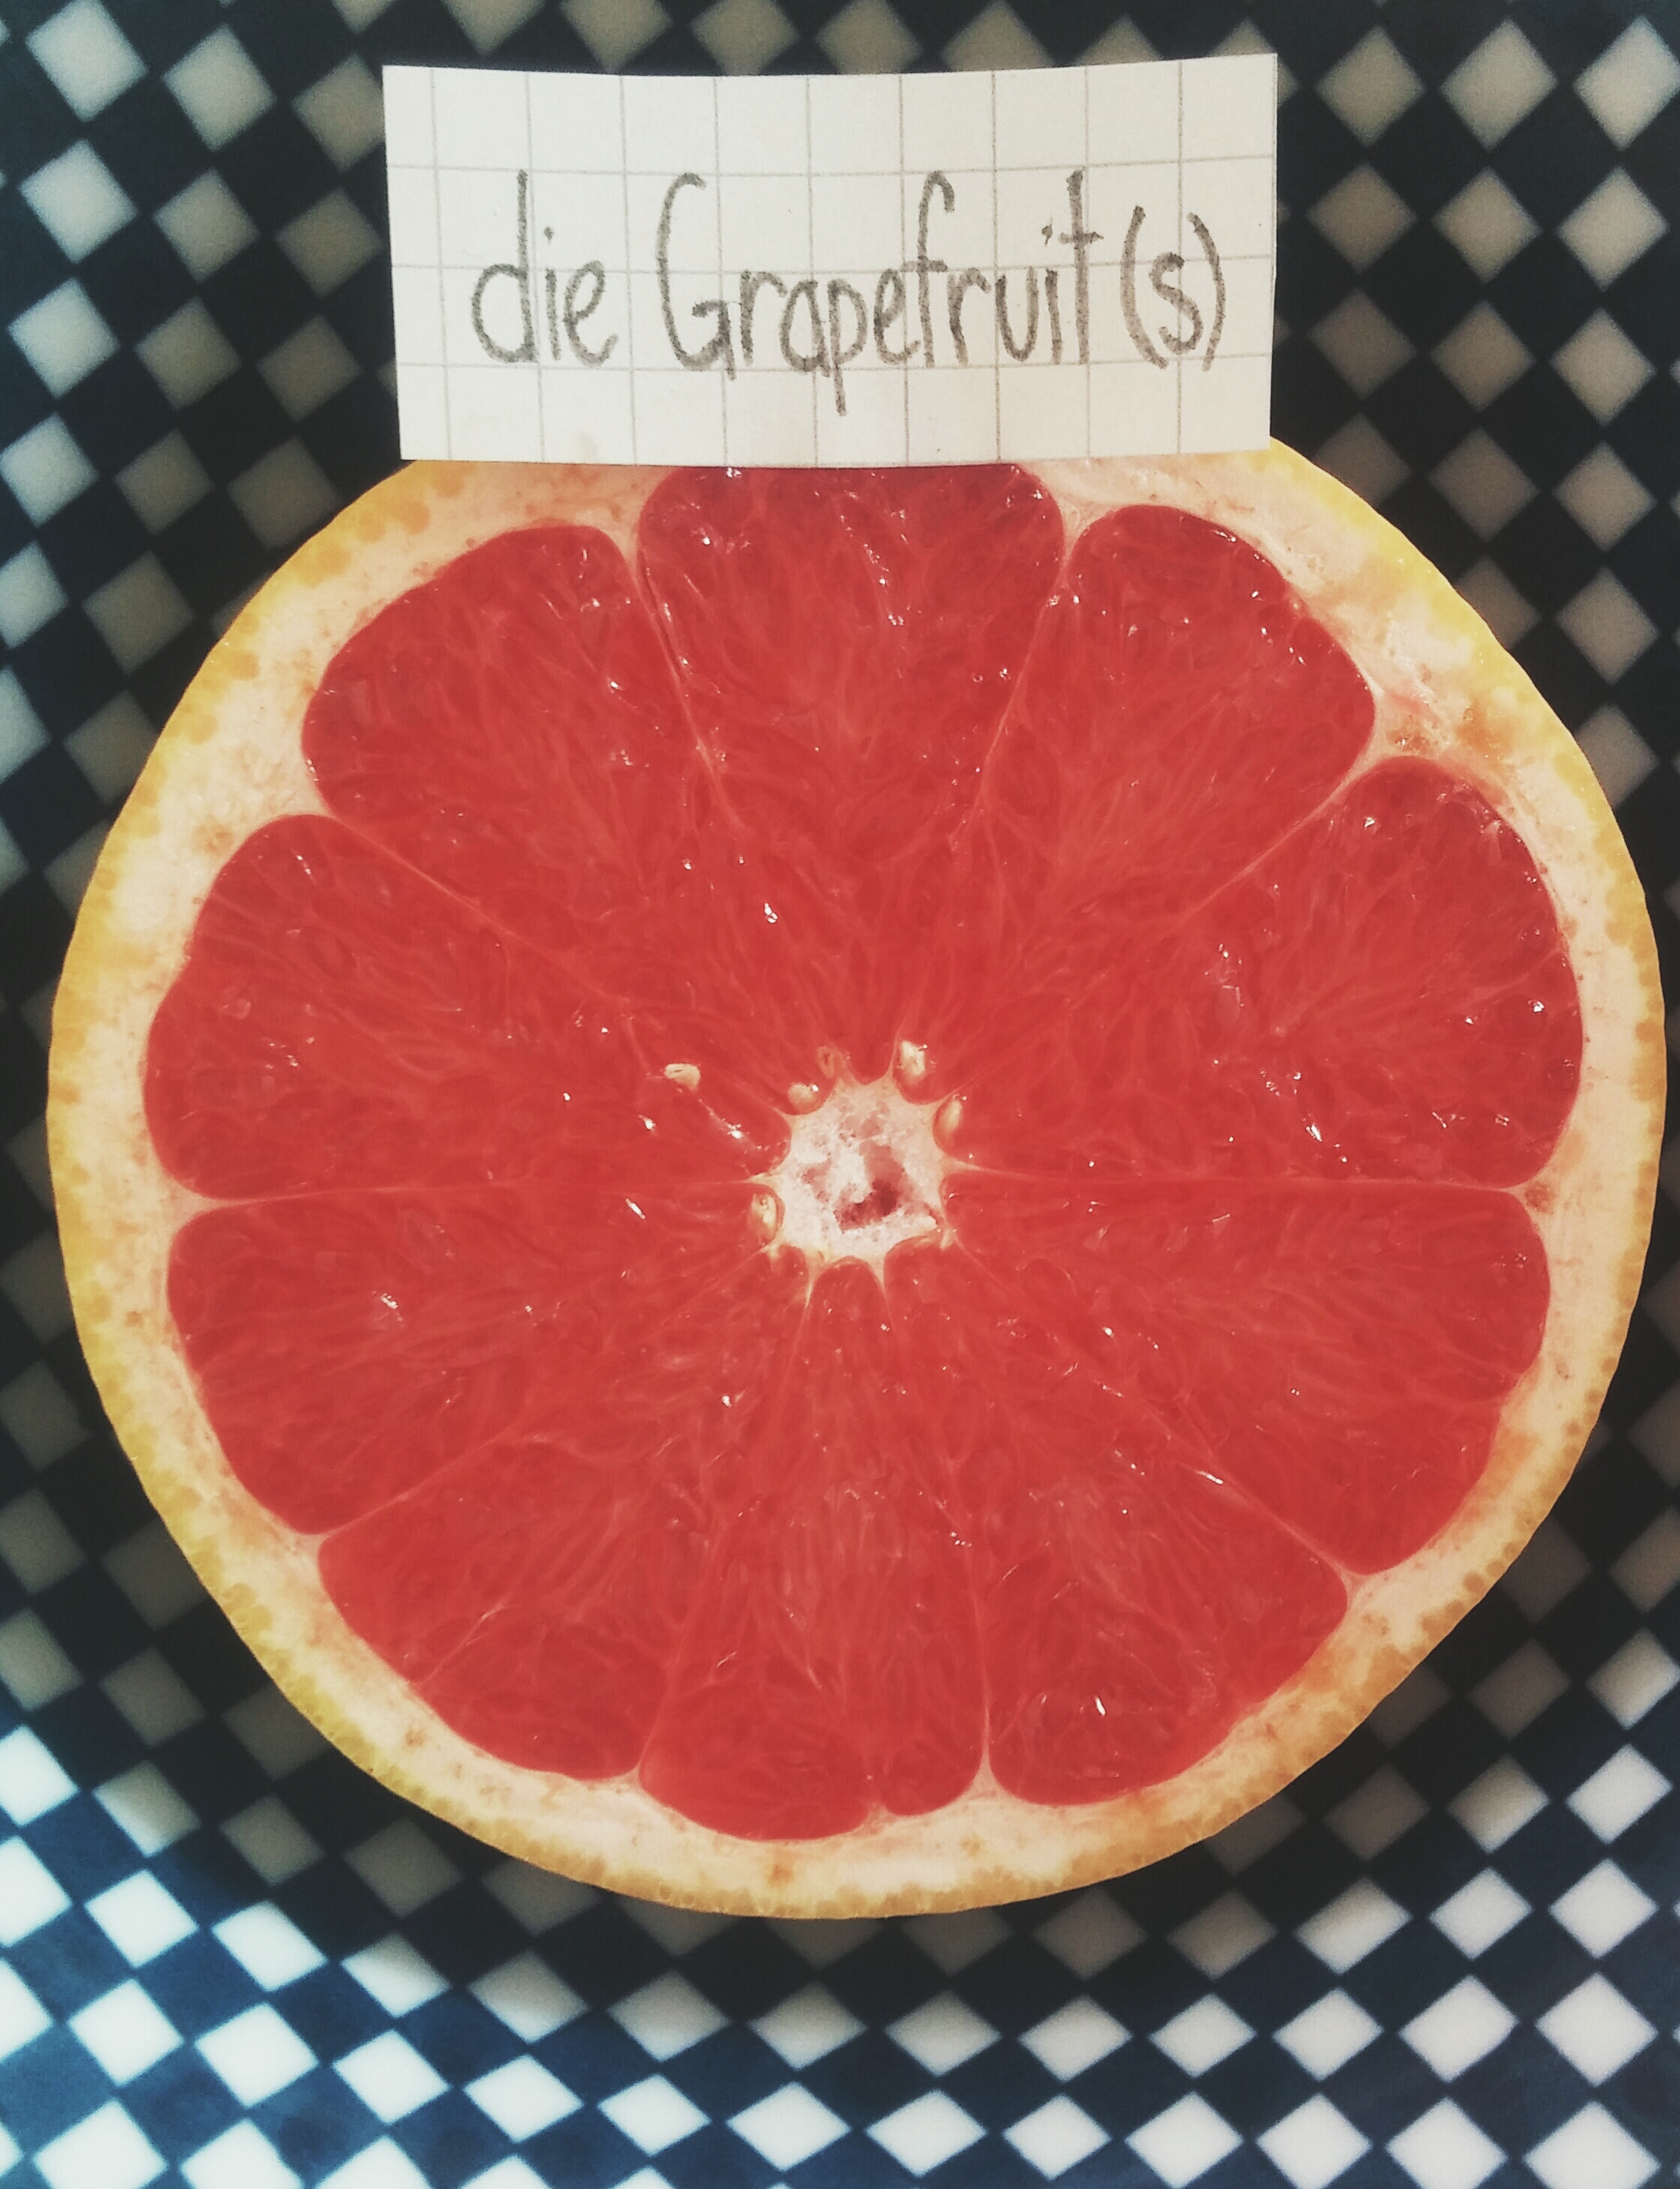 die Grapefruit - grapefruit